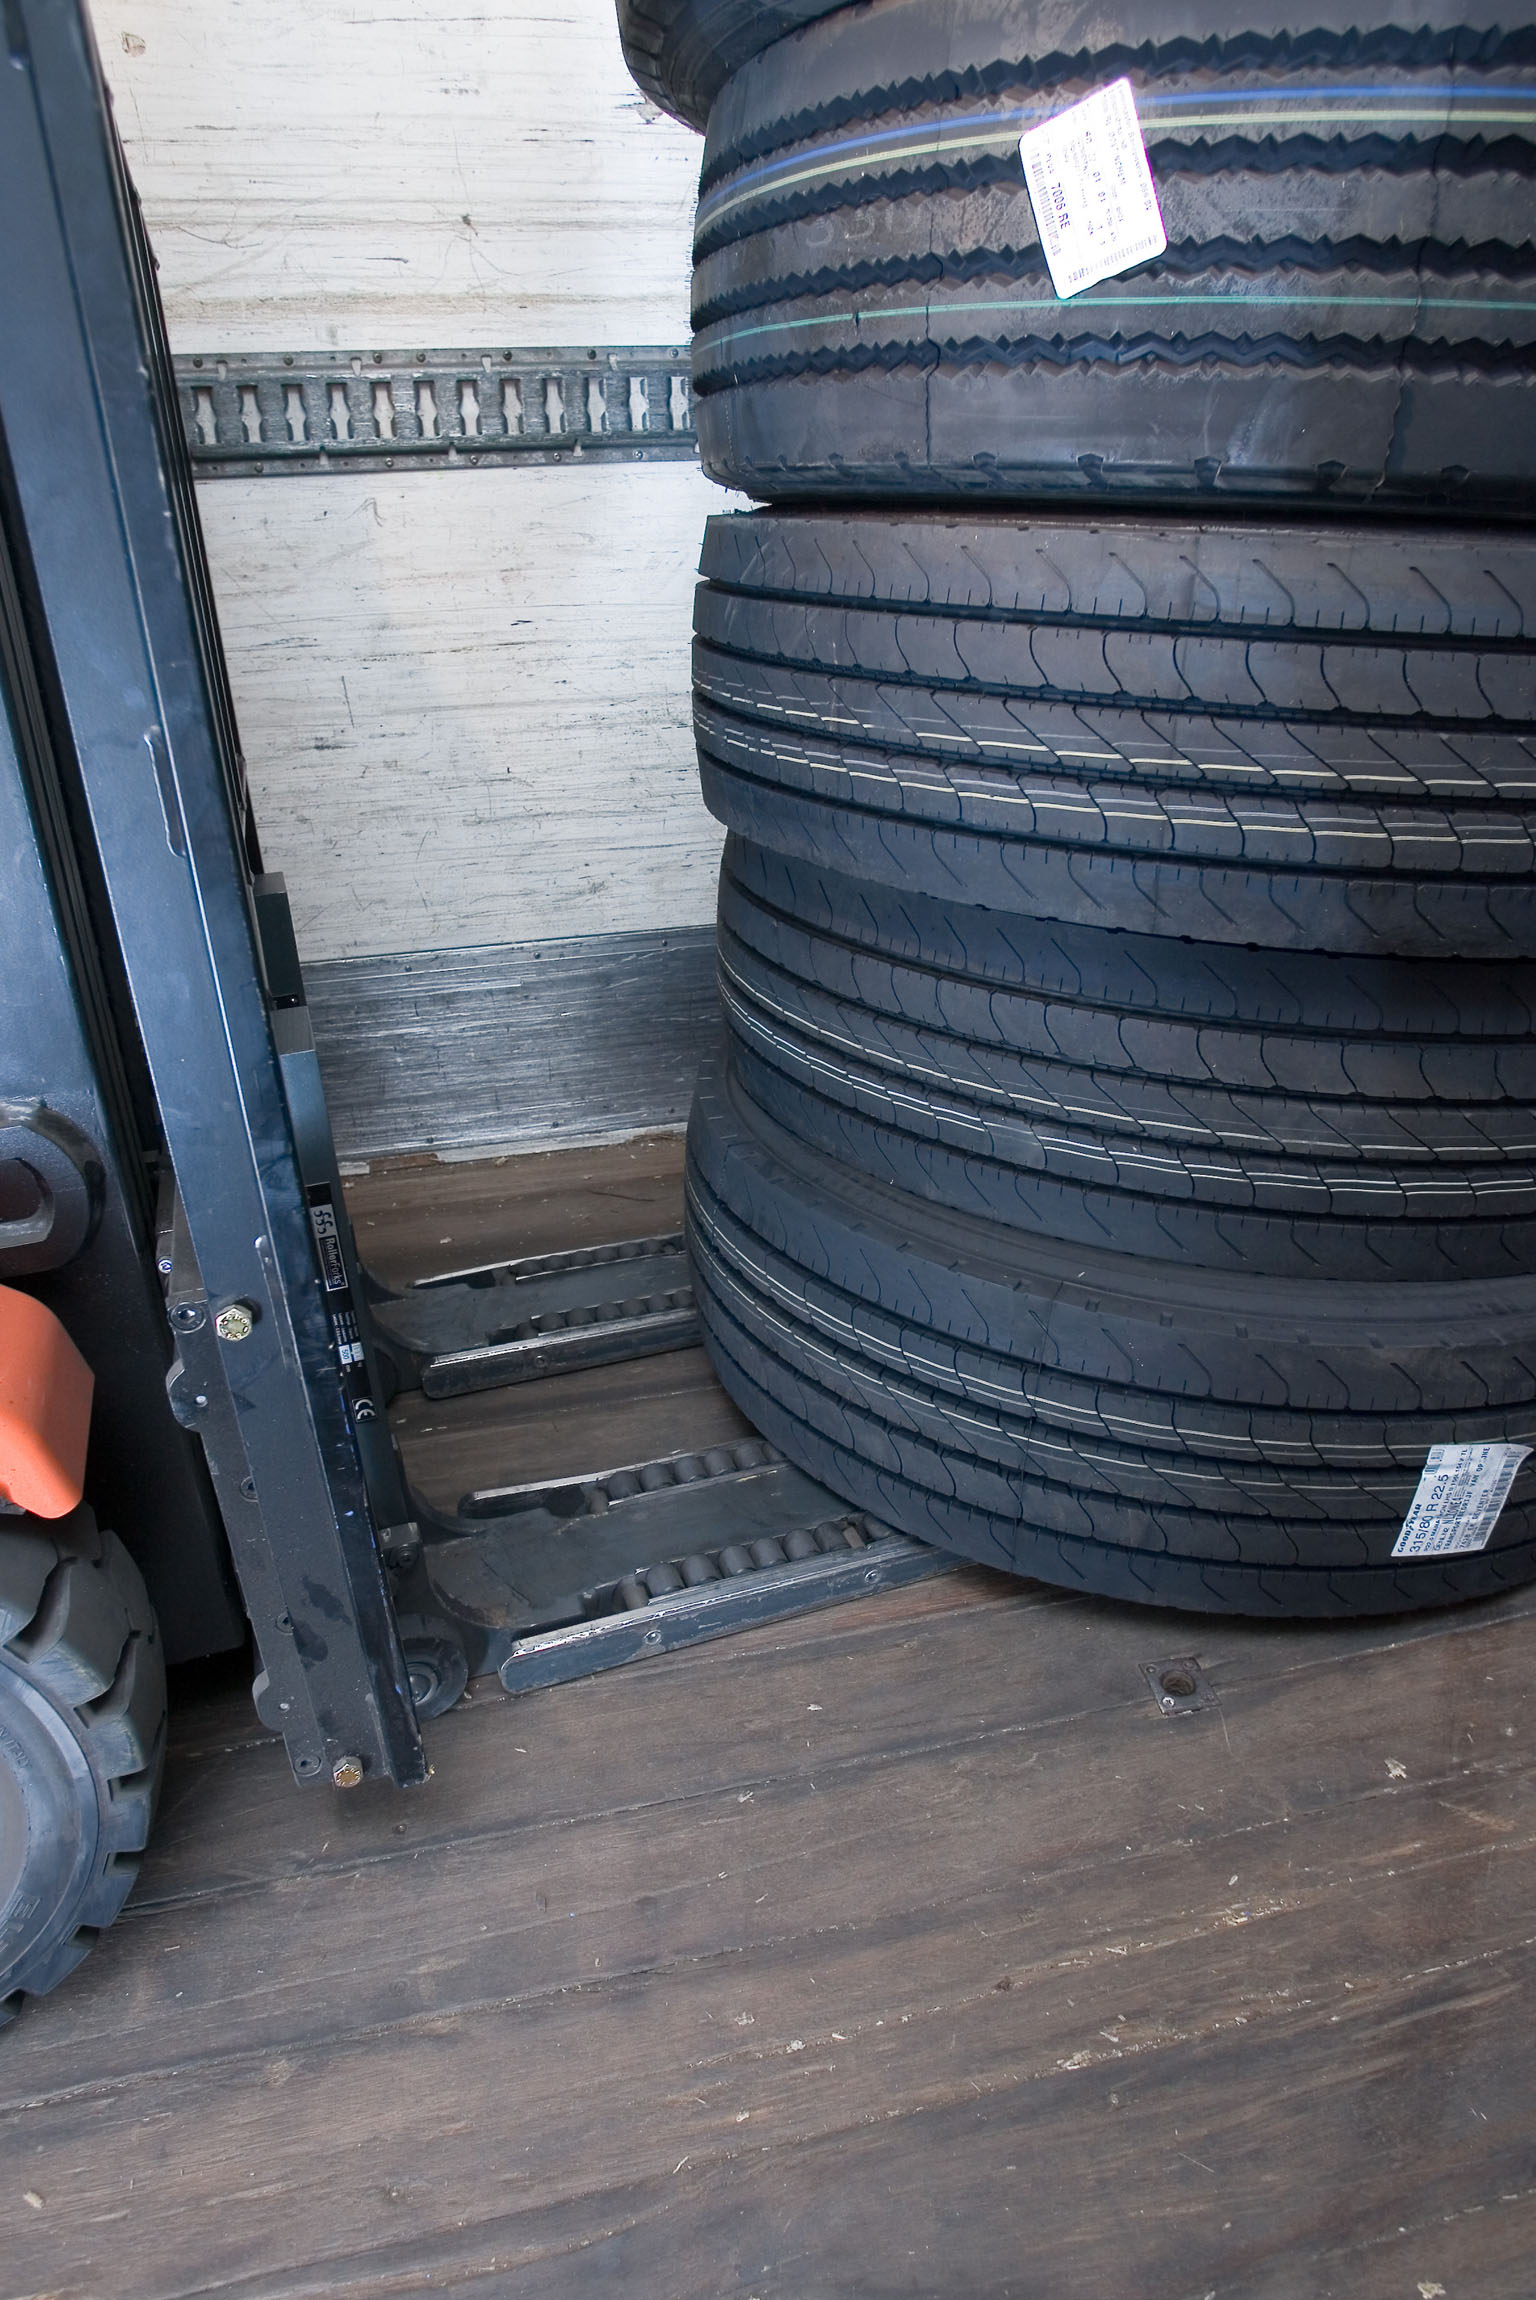 Forklift palletless handling attachment, RollerForks for slipsheets to handle car rubber tires